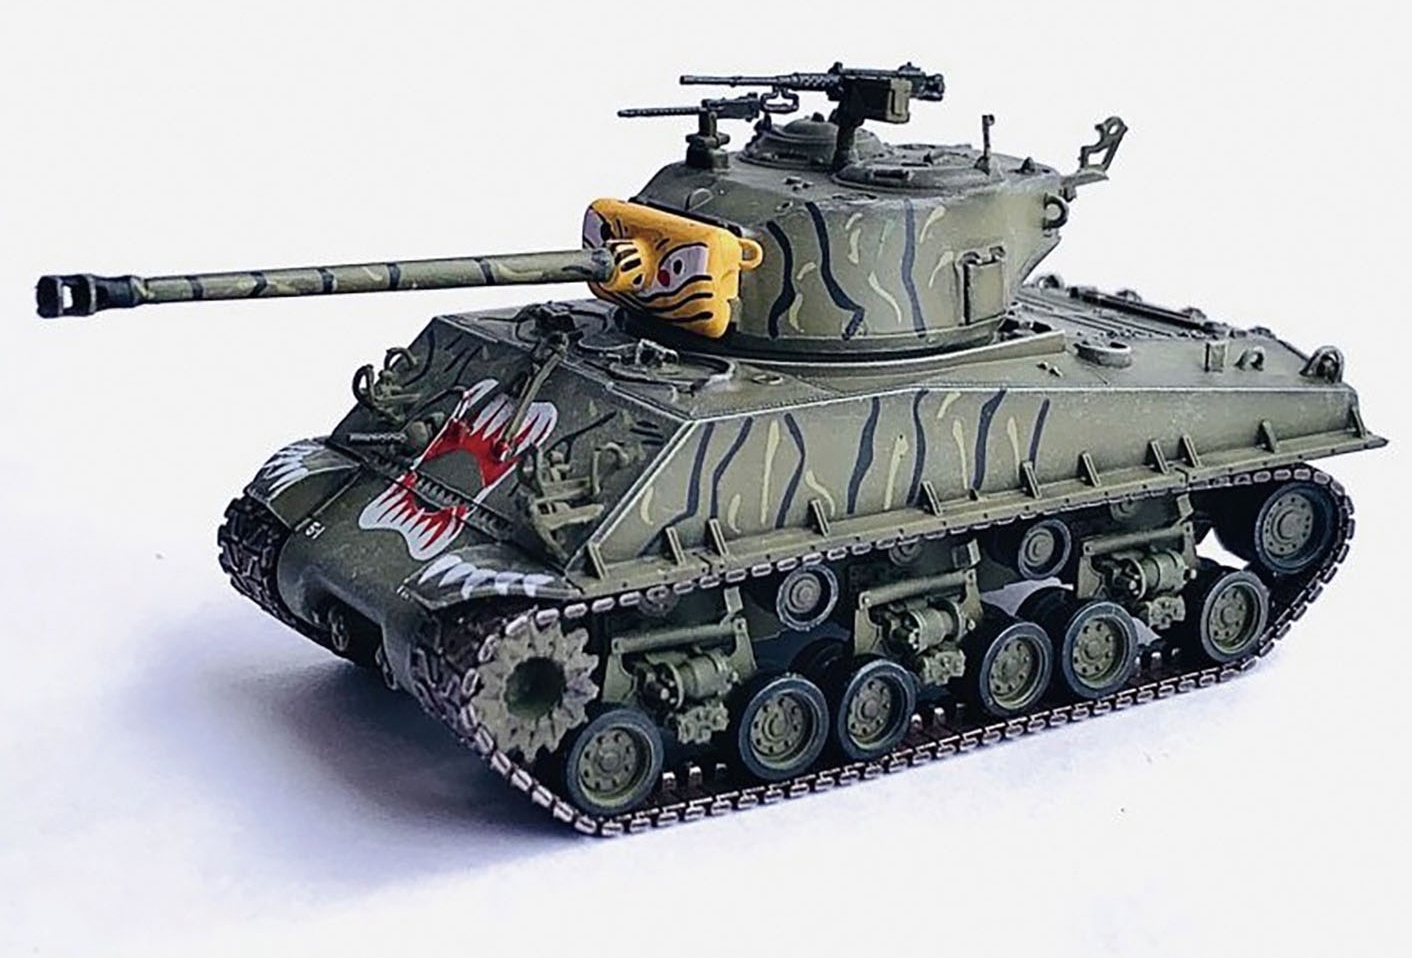 Us Army M4a3e8 Sherman Tiger Face 24th Infantry Division Korean War